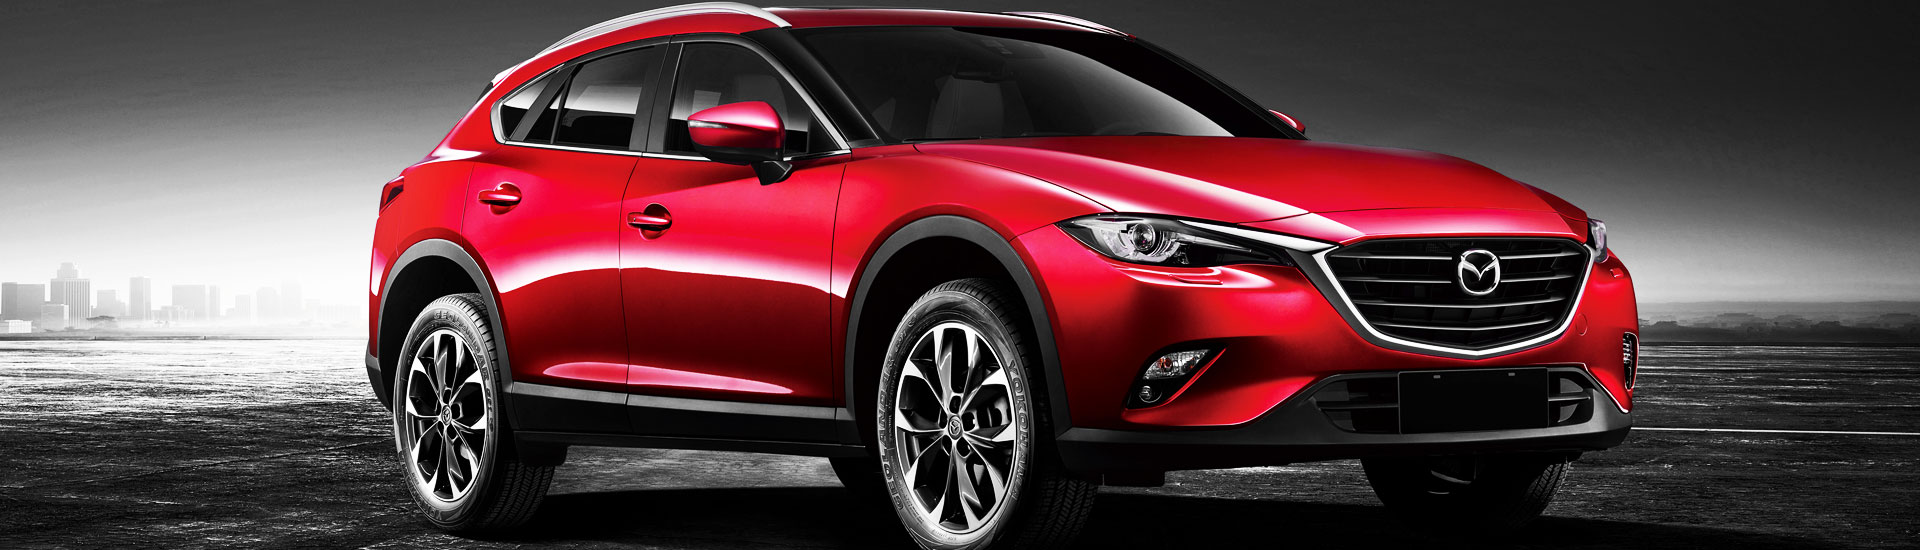 2016 Mazda Mazda3 Window Tint